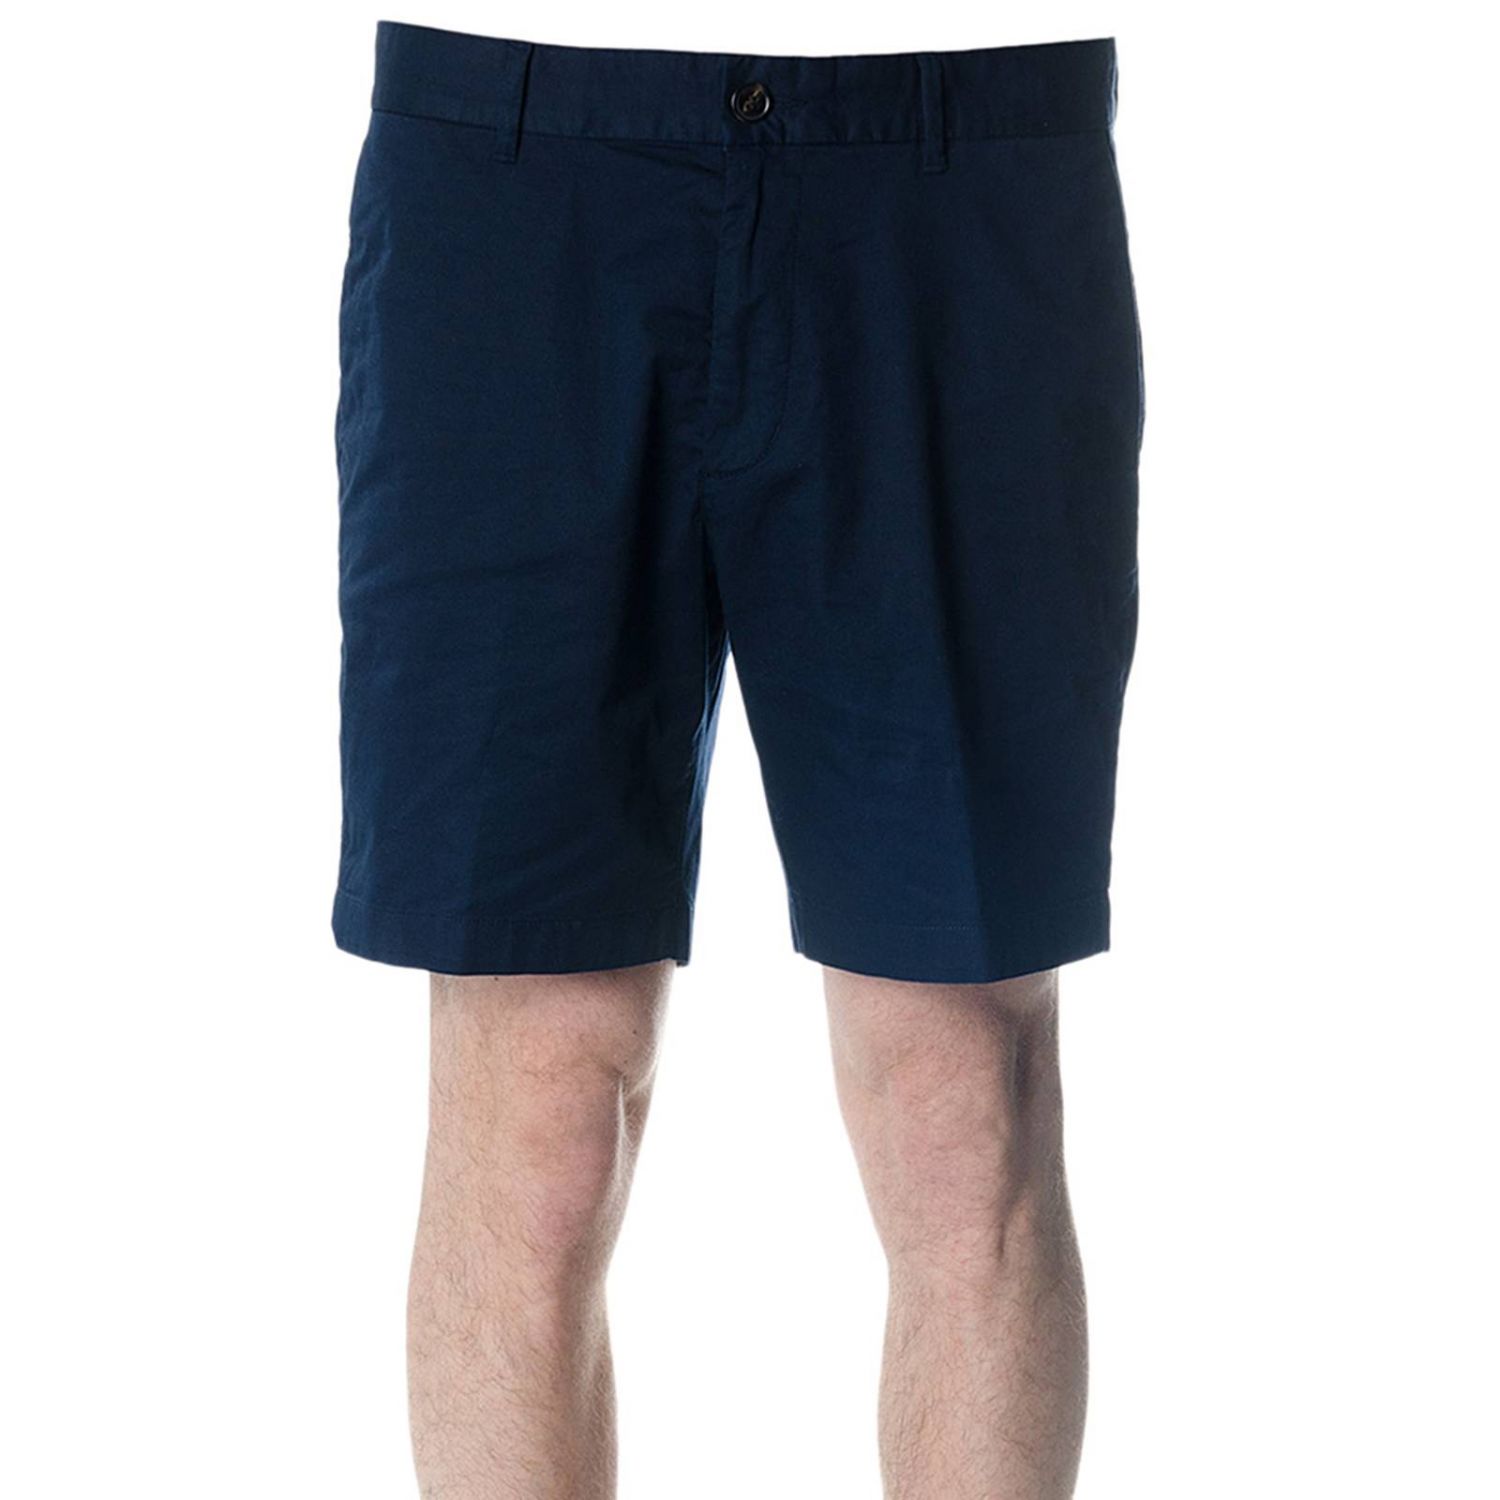 kors michael kors shorts men's